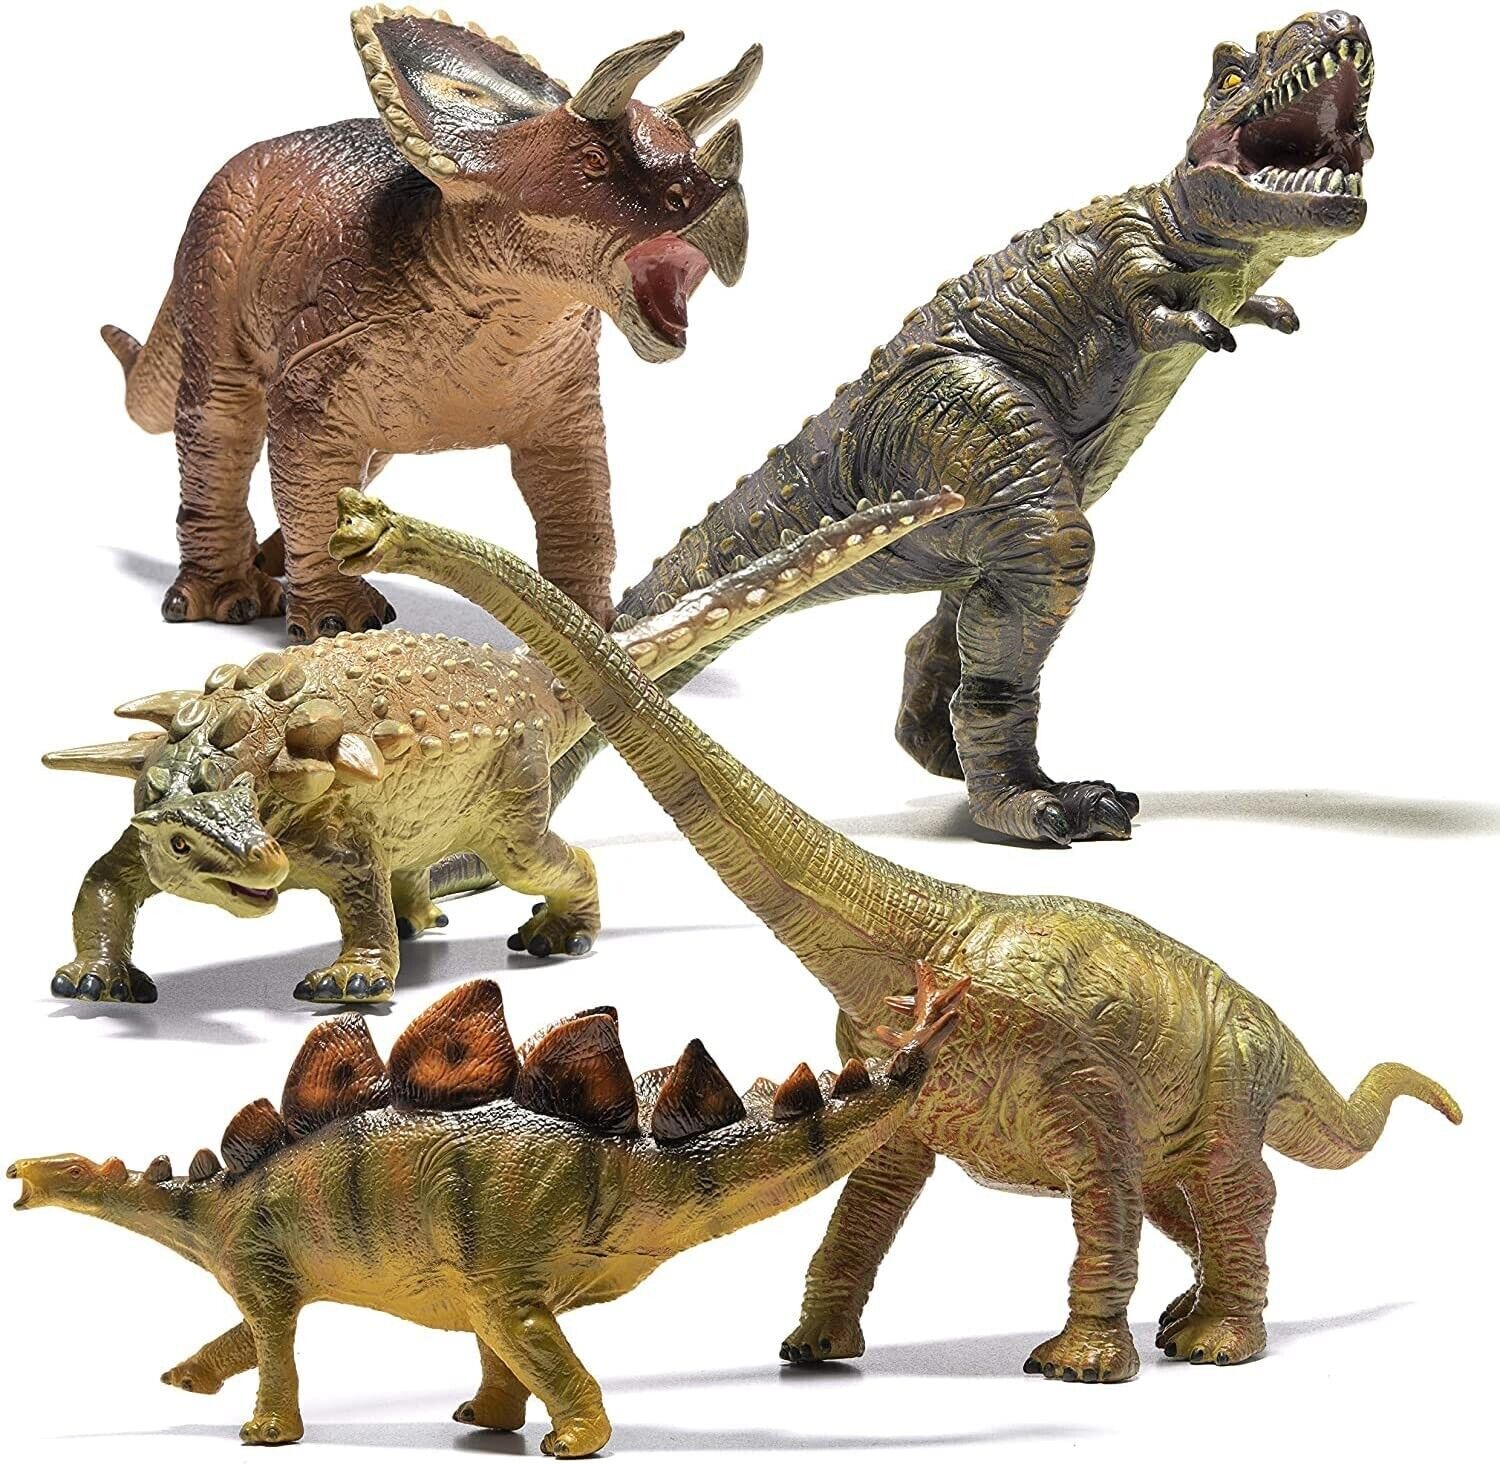 PRETEX 5 PCS Giant Dinosaur Toy Figures Set - Realistic and Large Dinosaur,NEW